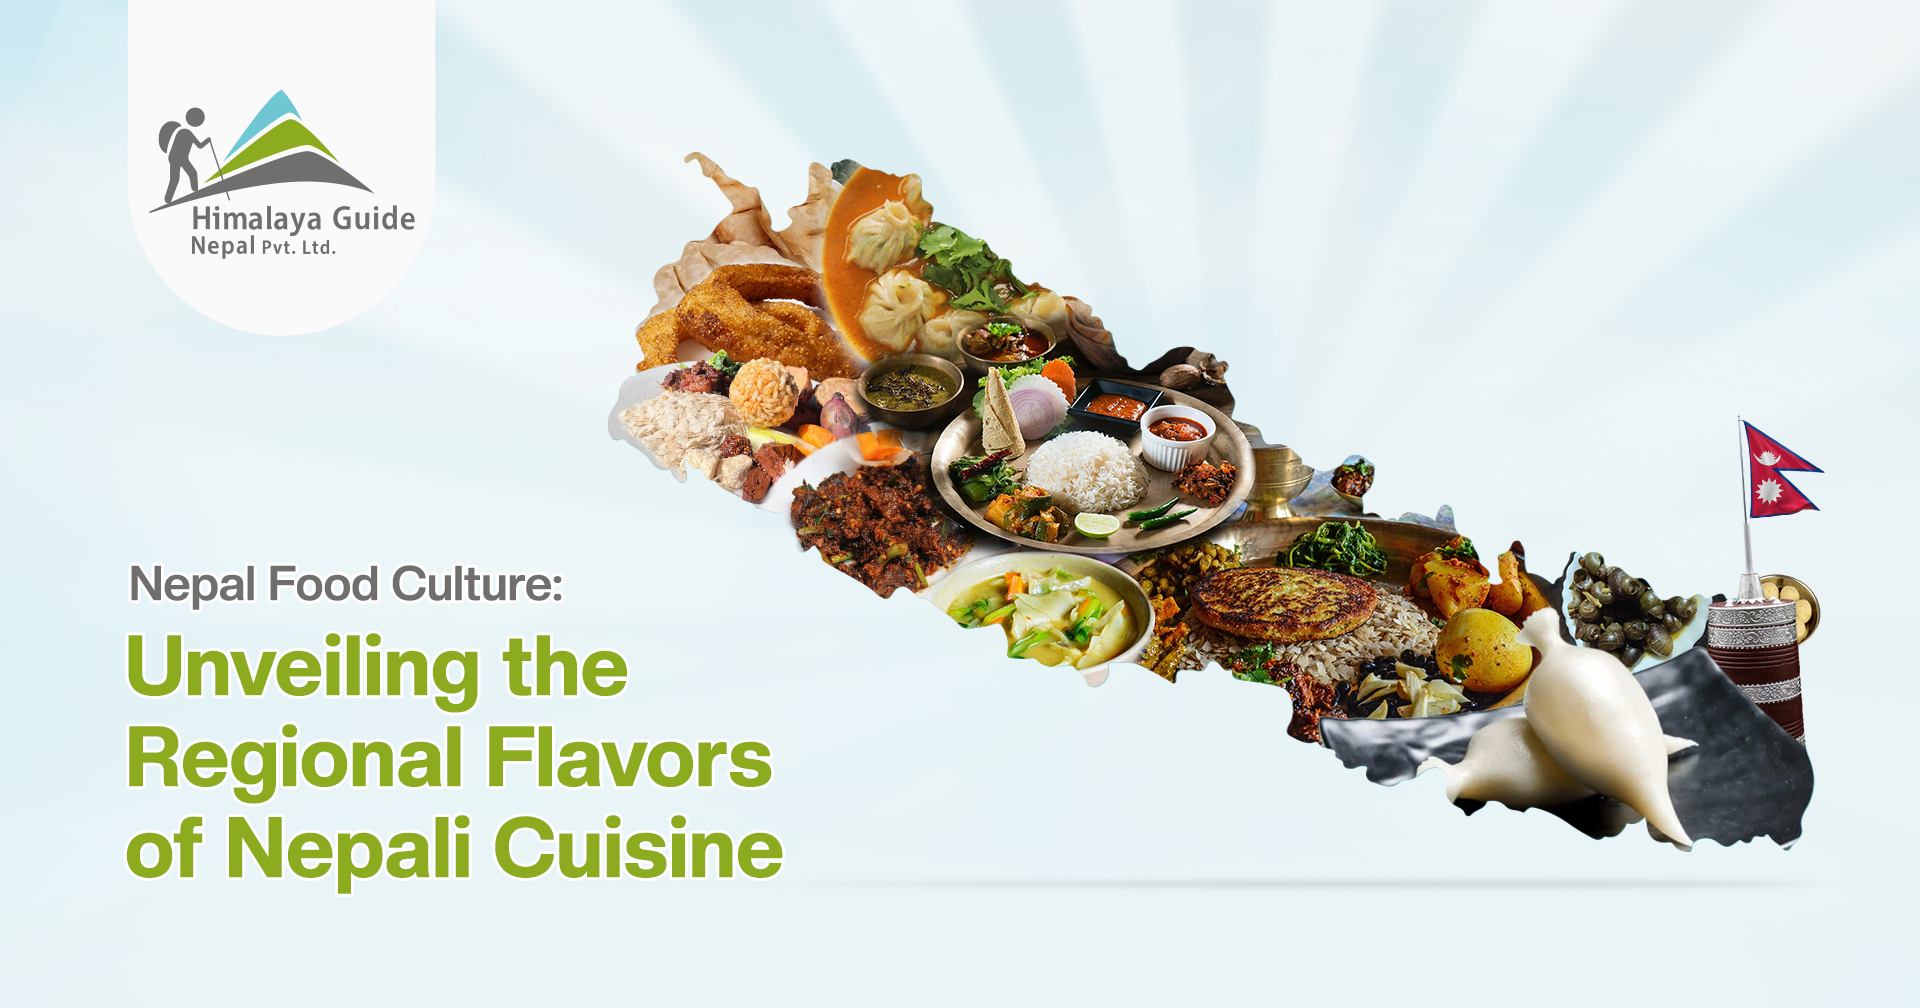 Nepal Food Culture: Unveiling the Regional Flavors of Nepali Cuisine